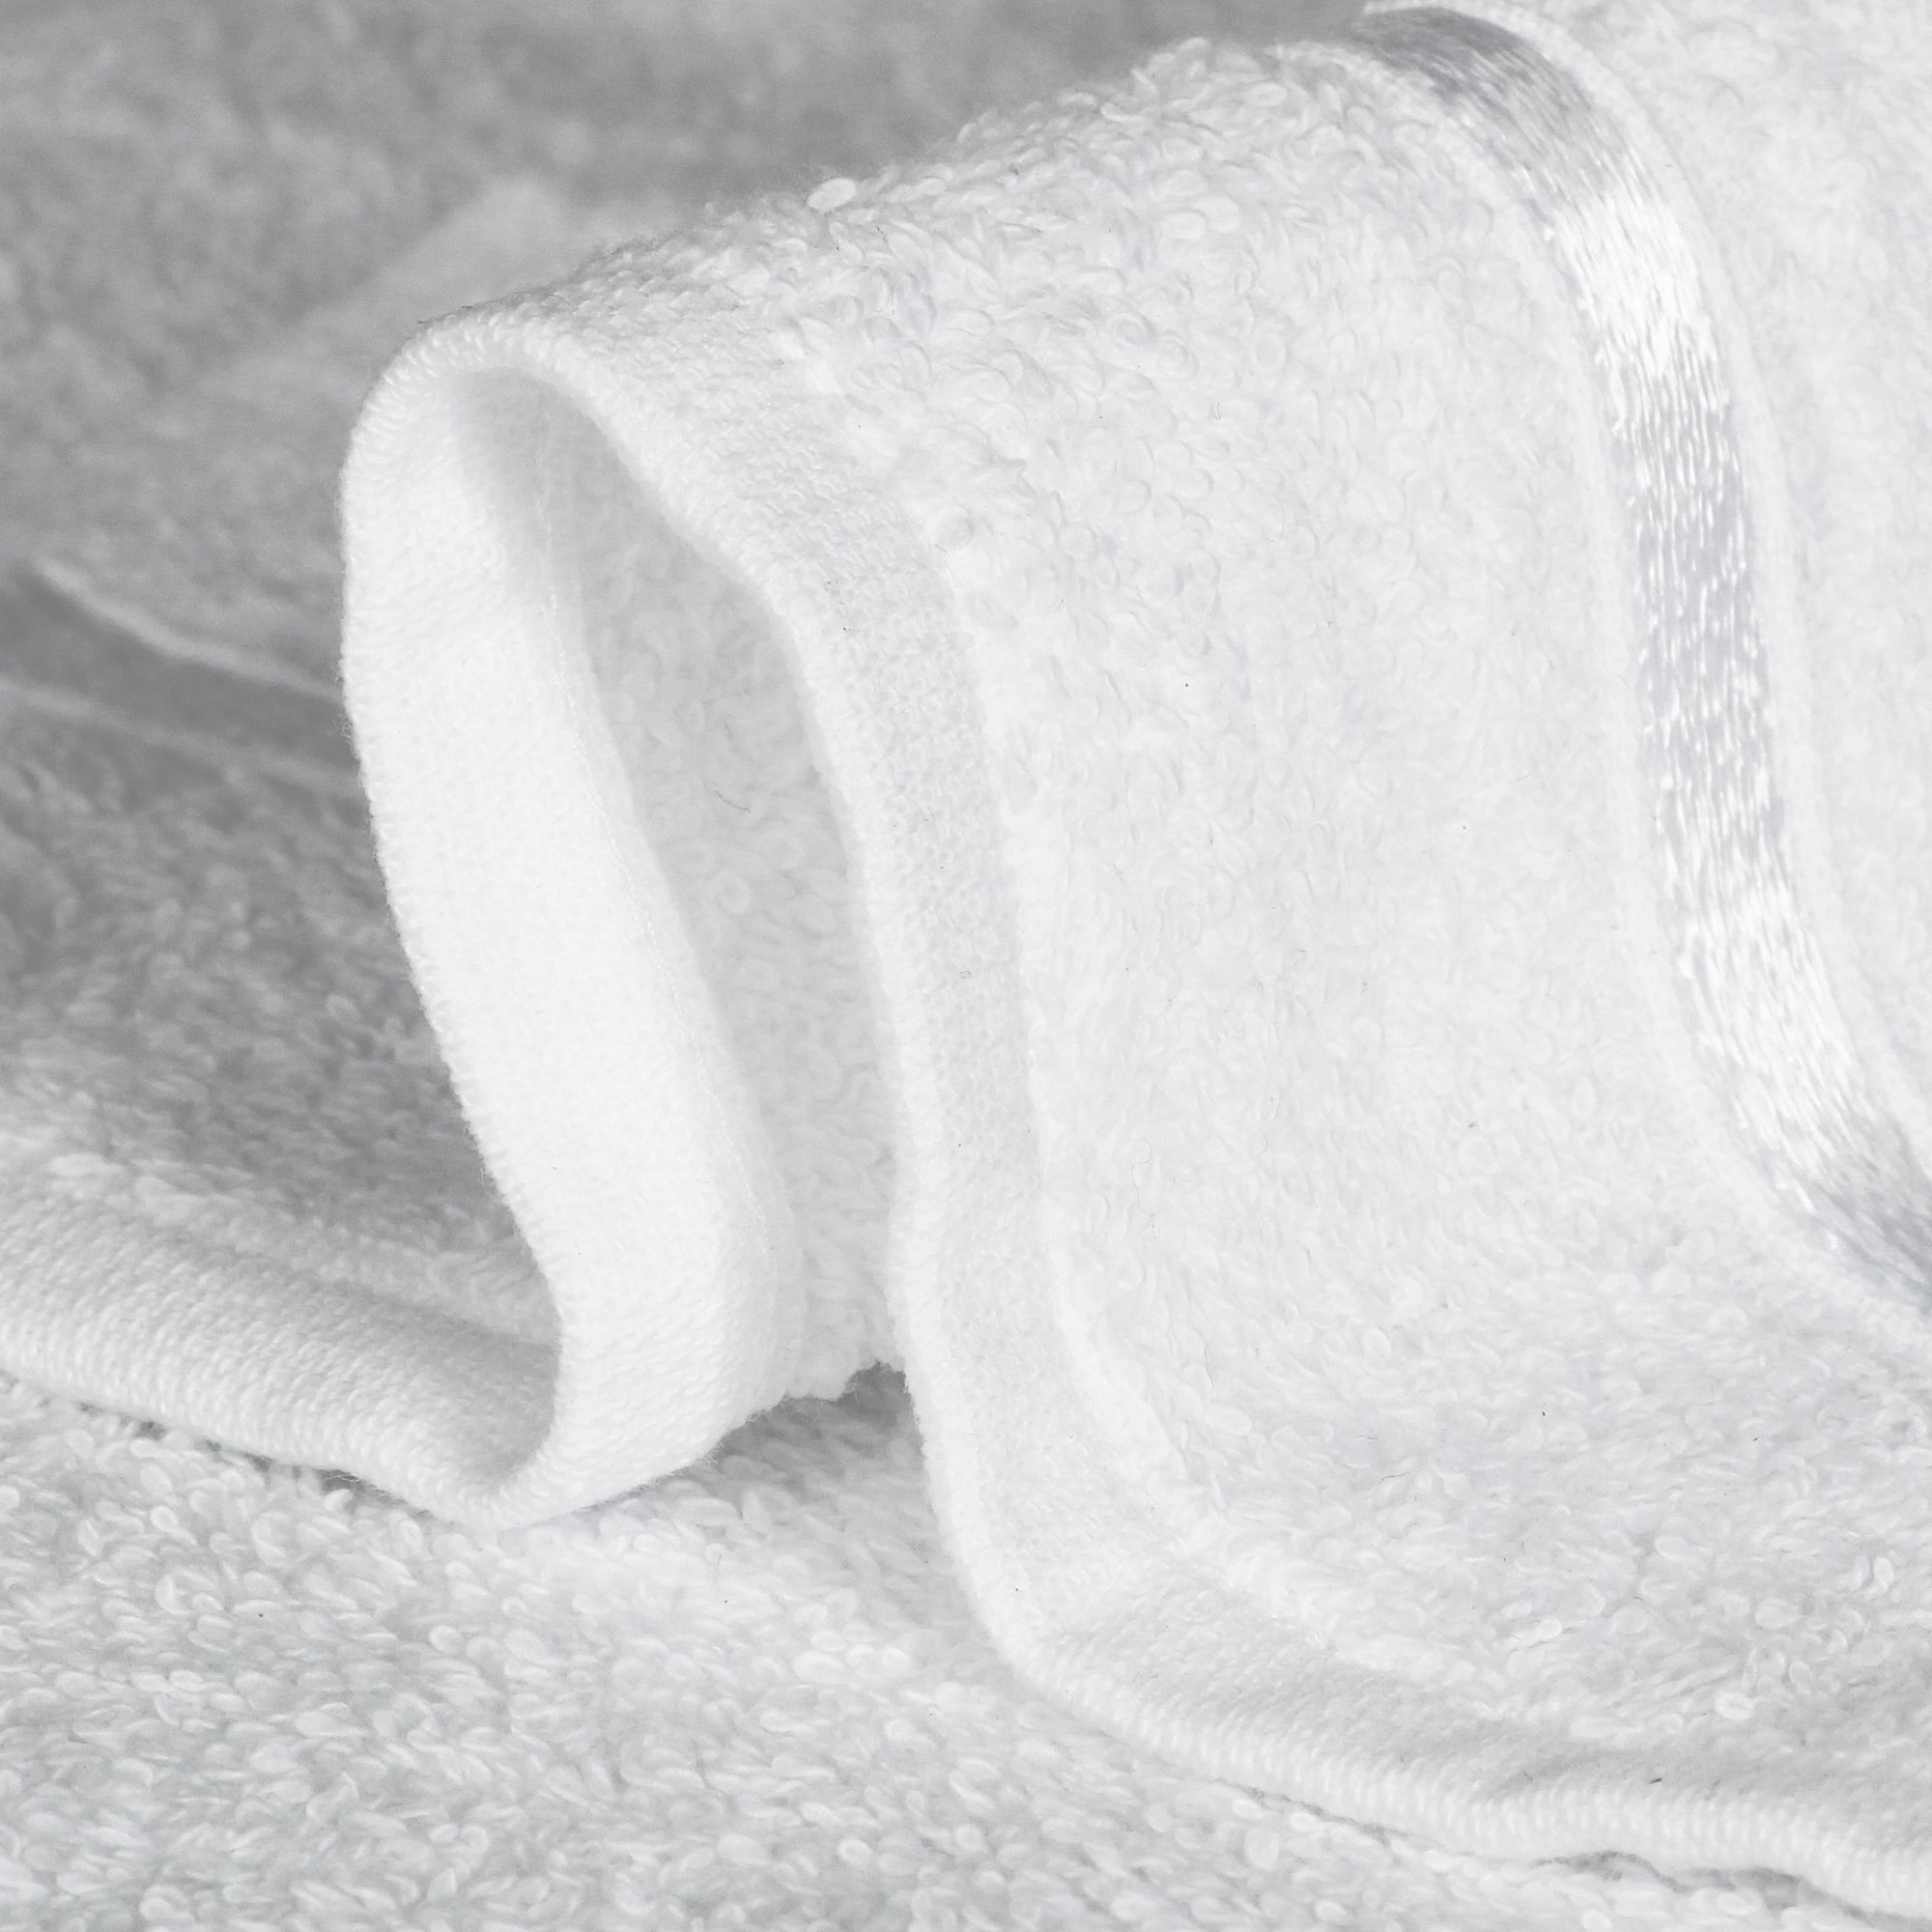 Story@Home 2 Units 100% Cotton Ladies Bath Towel - White